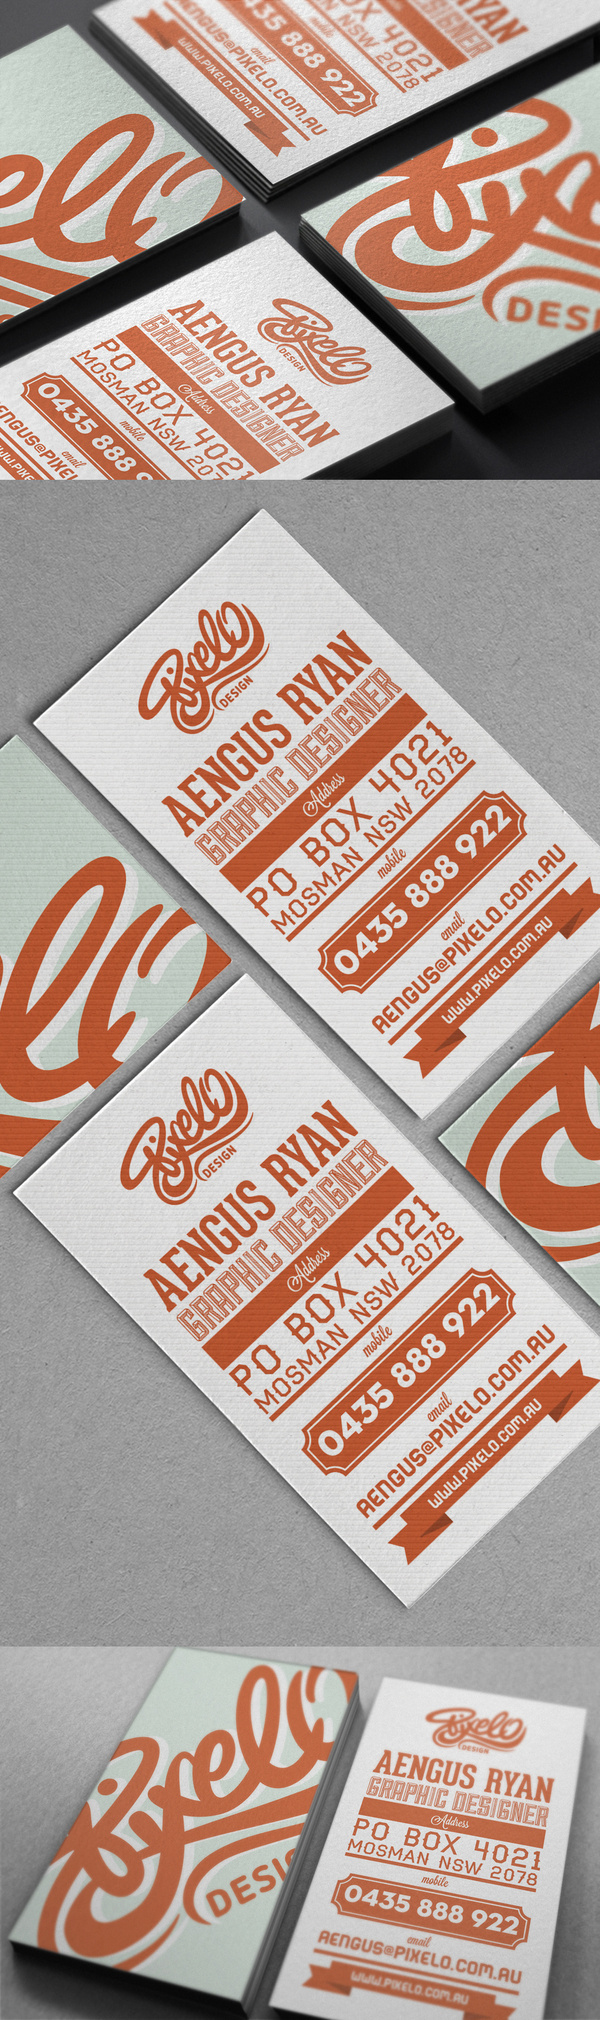 Business card design idea #207: Pixelo Corporate identity // Branding #business #branding #design #retro #orange #logo #cards